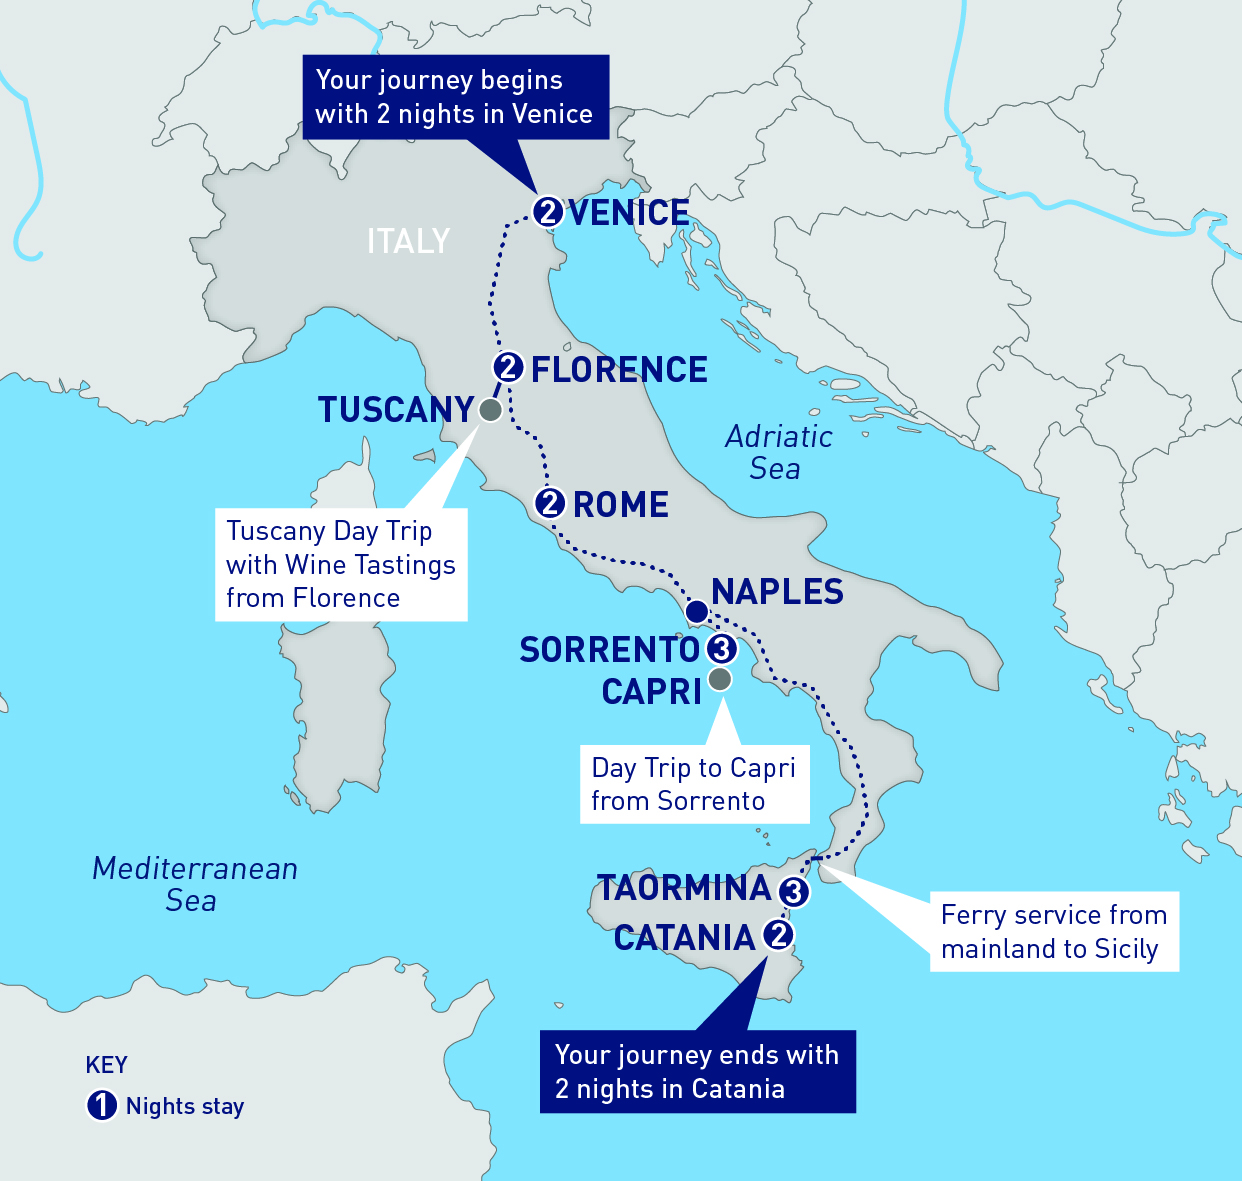 a) Location of Sicily (Italy) in the Mediterranean Sea; (b